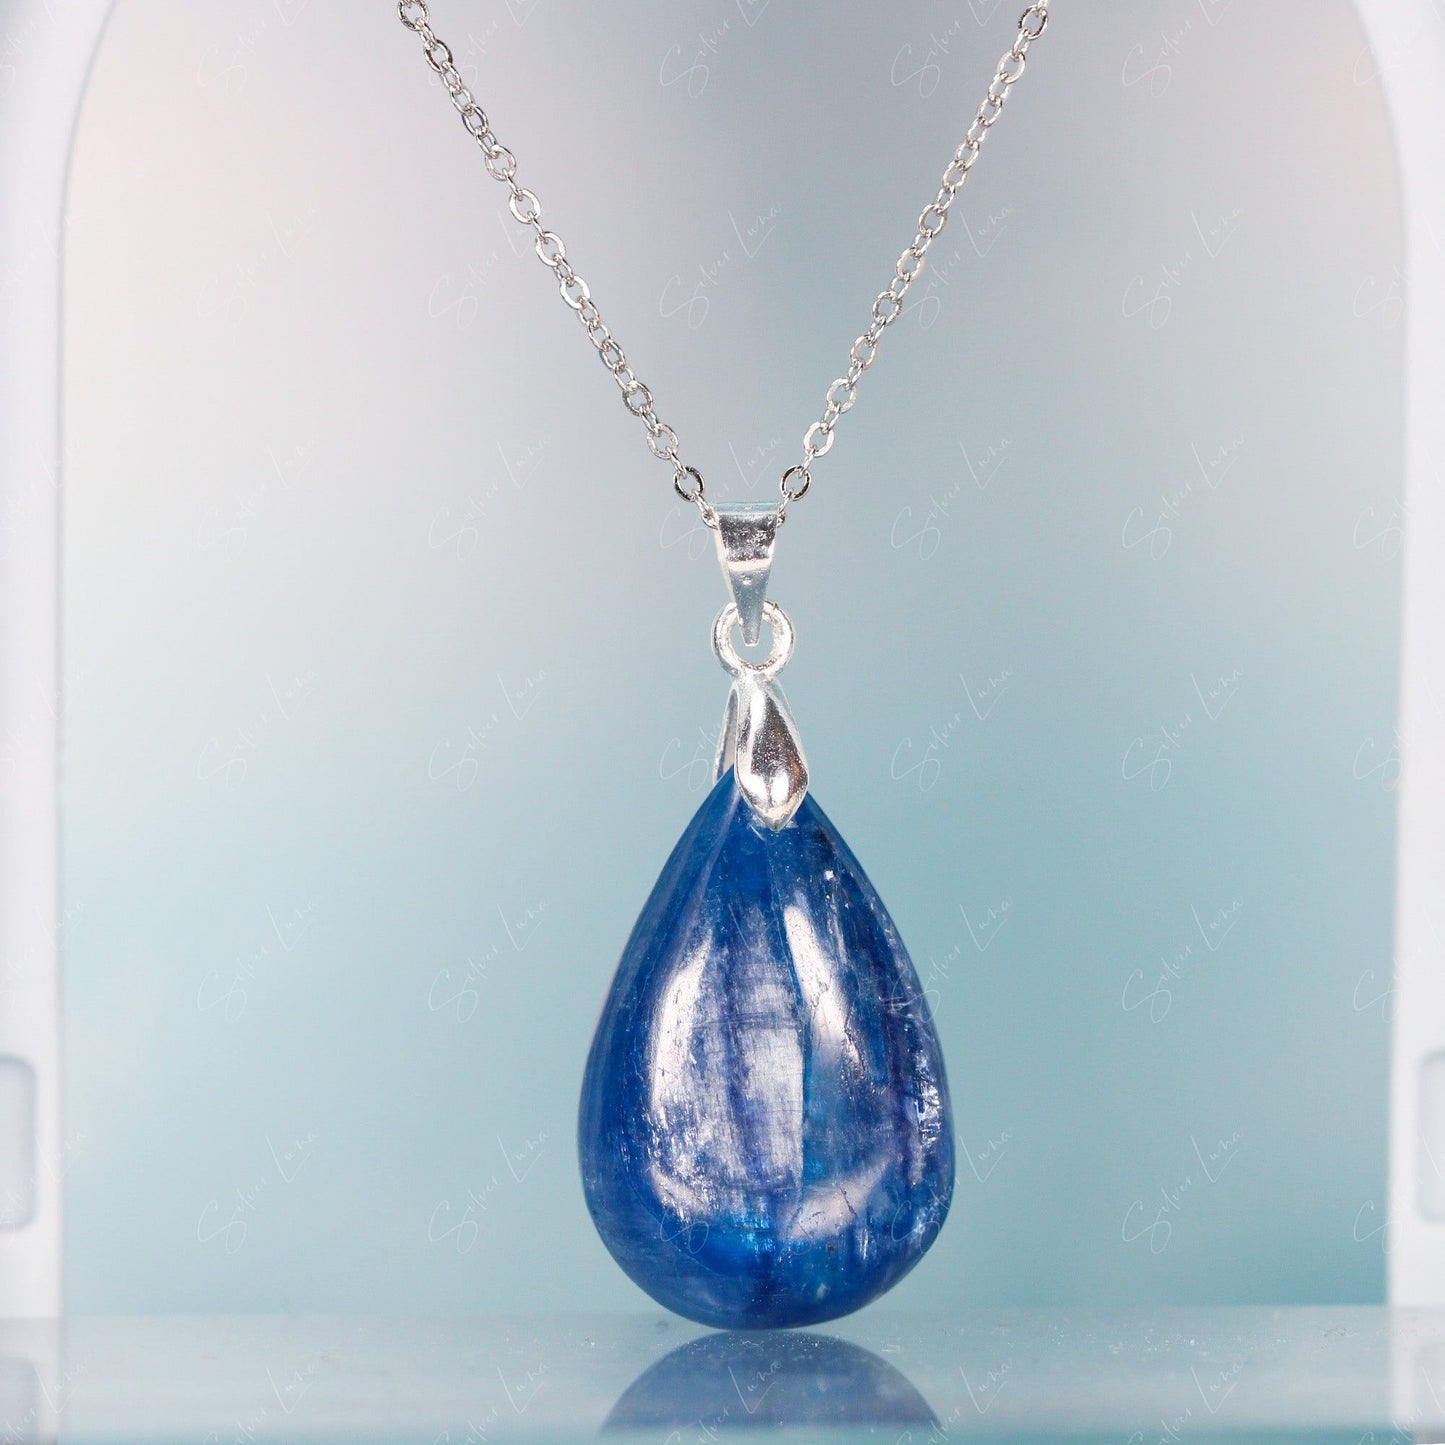 Blue Kyanite teardrop pendant necklace